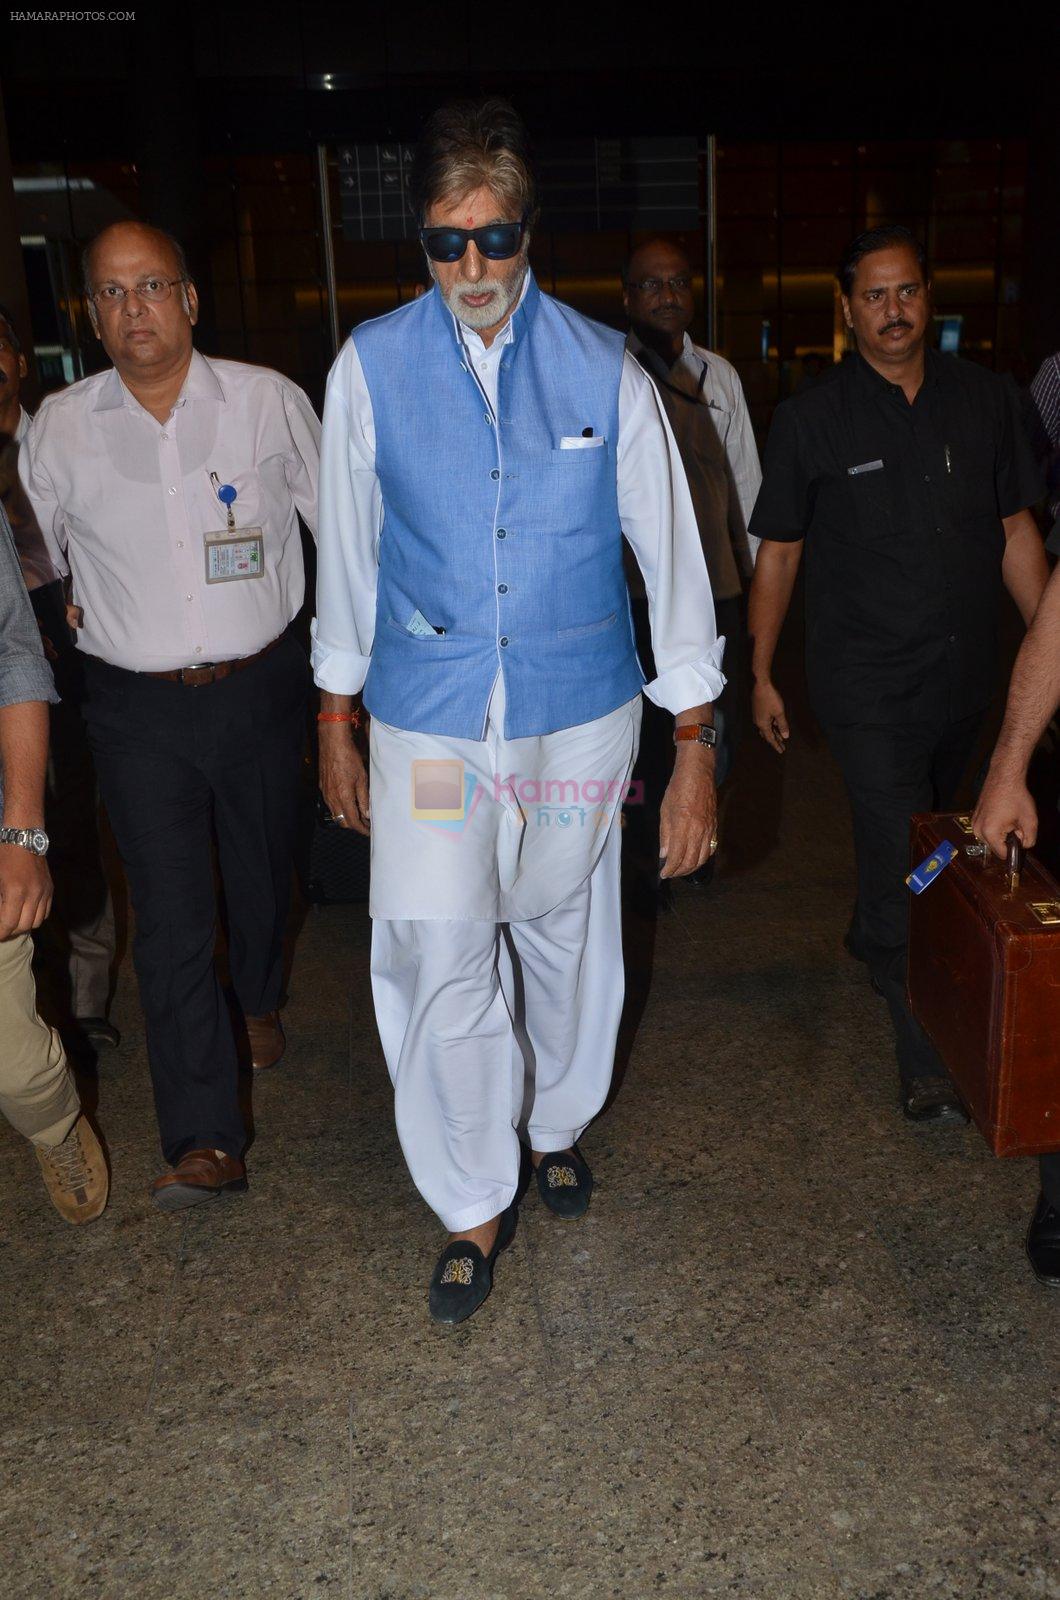 Amitabh Bachchan snapped at airport on 29th May 2016